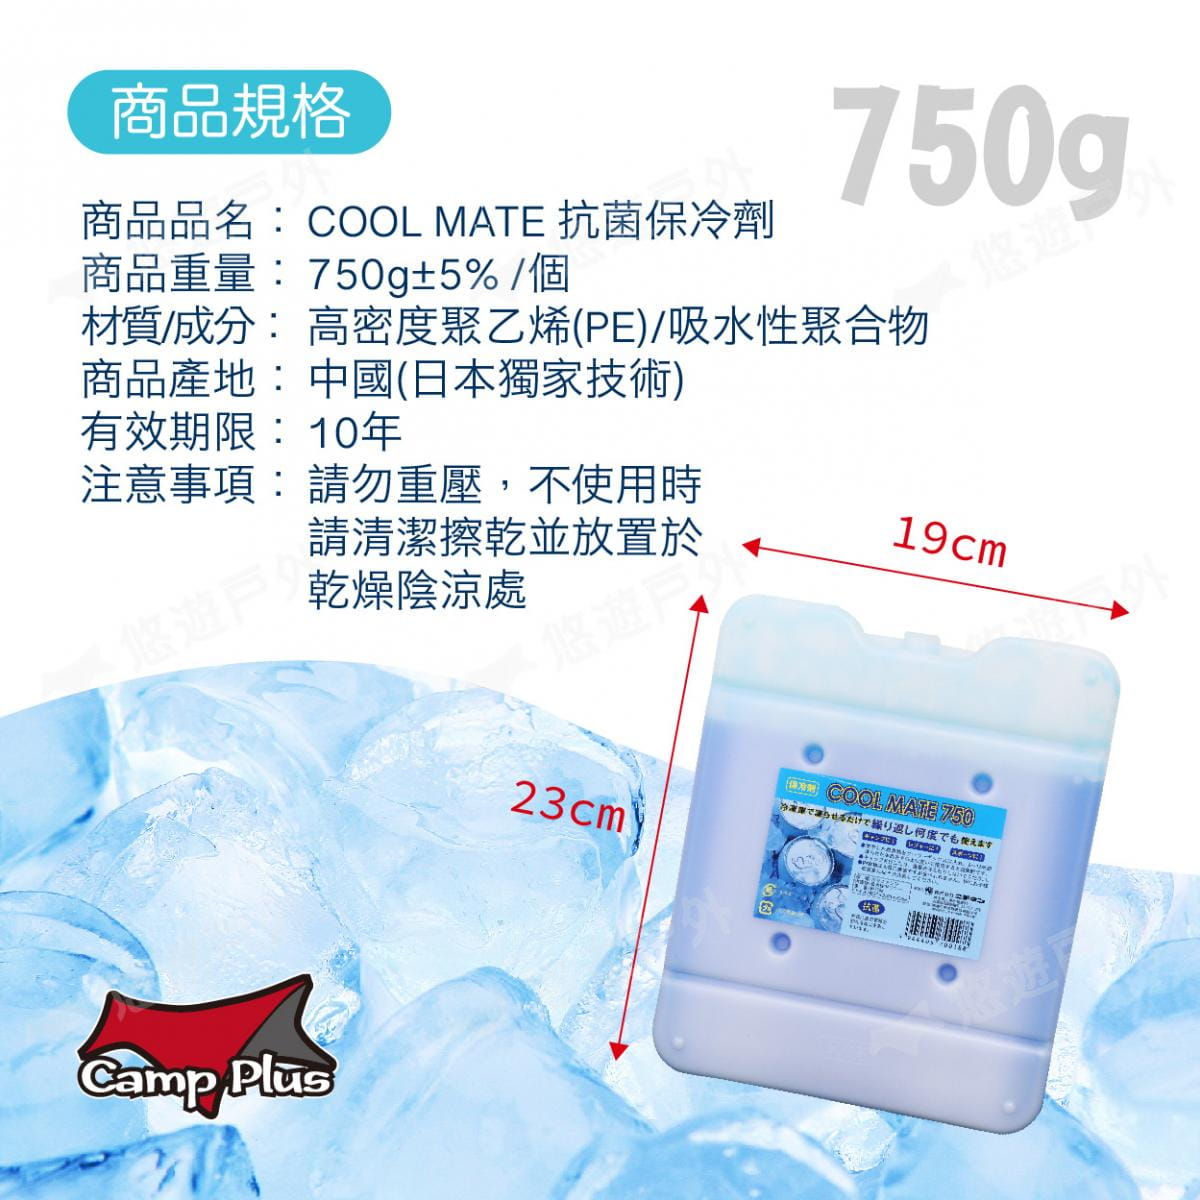 【Camp Plus】COOL MATE 抗菌保冷劑750g (悠遊戶外) 4